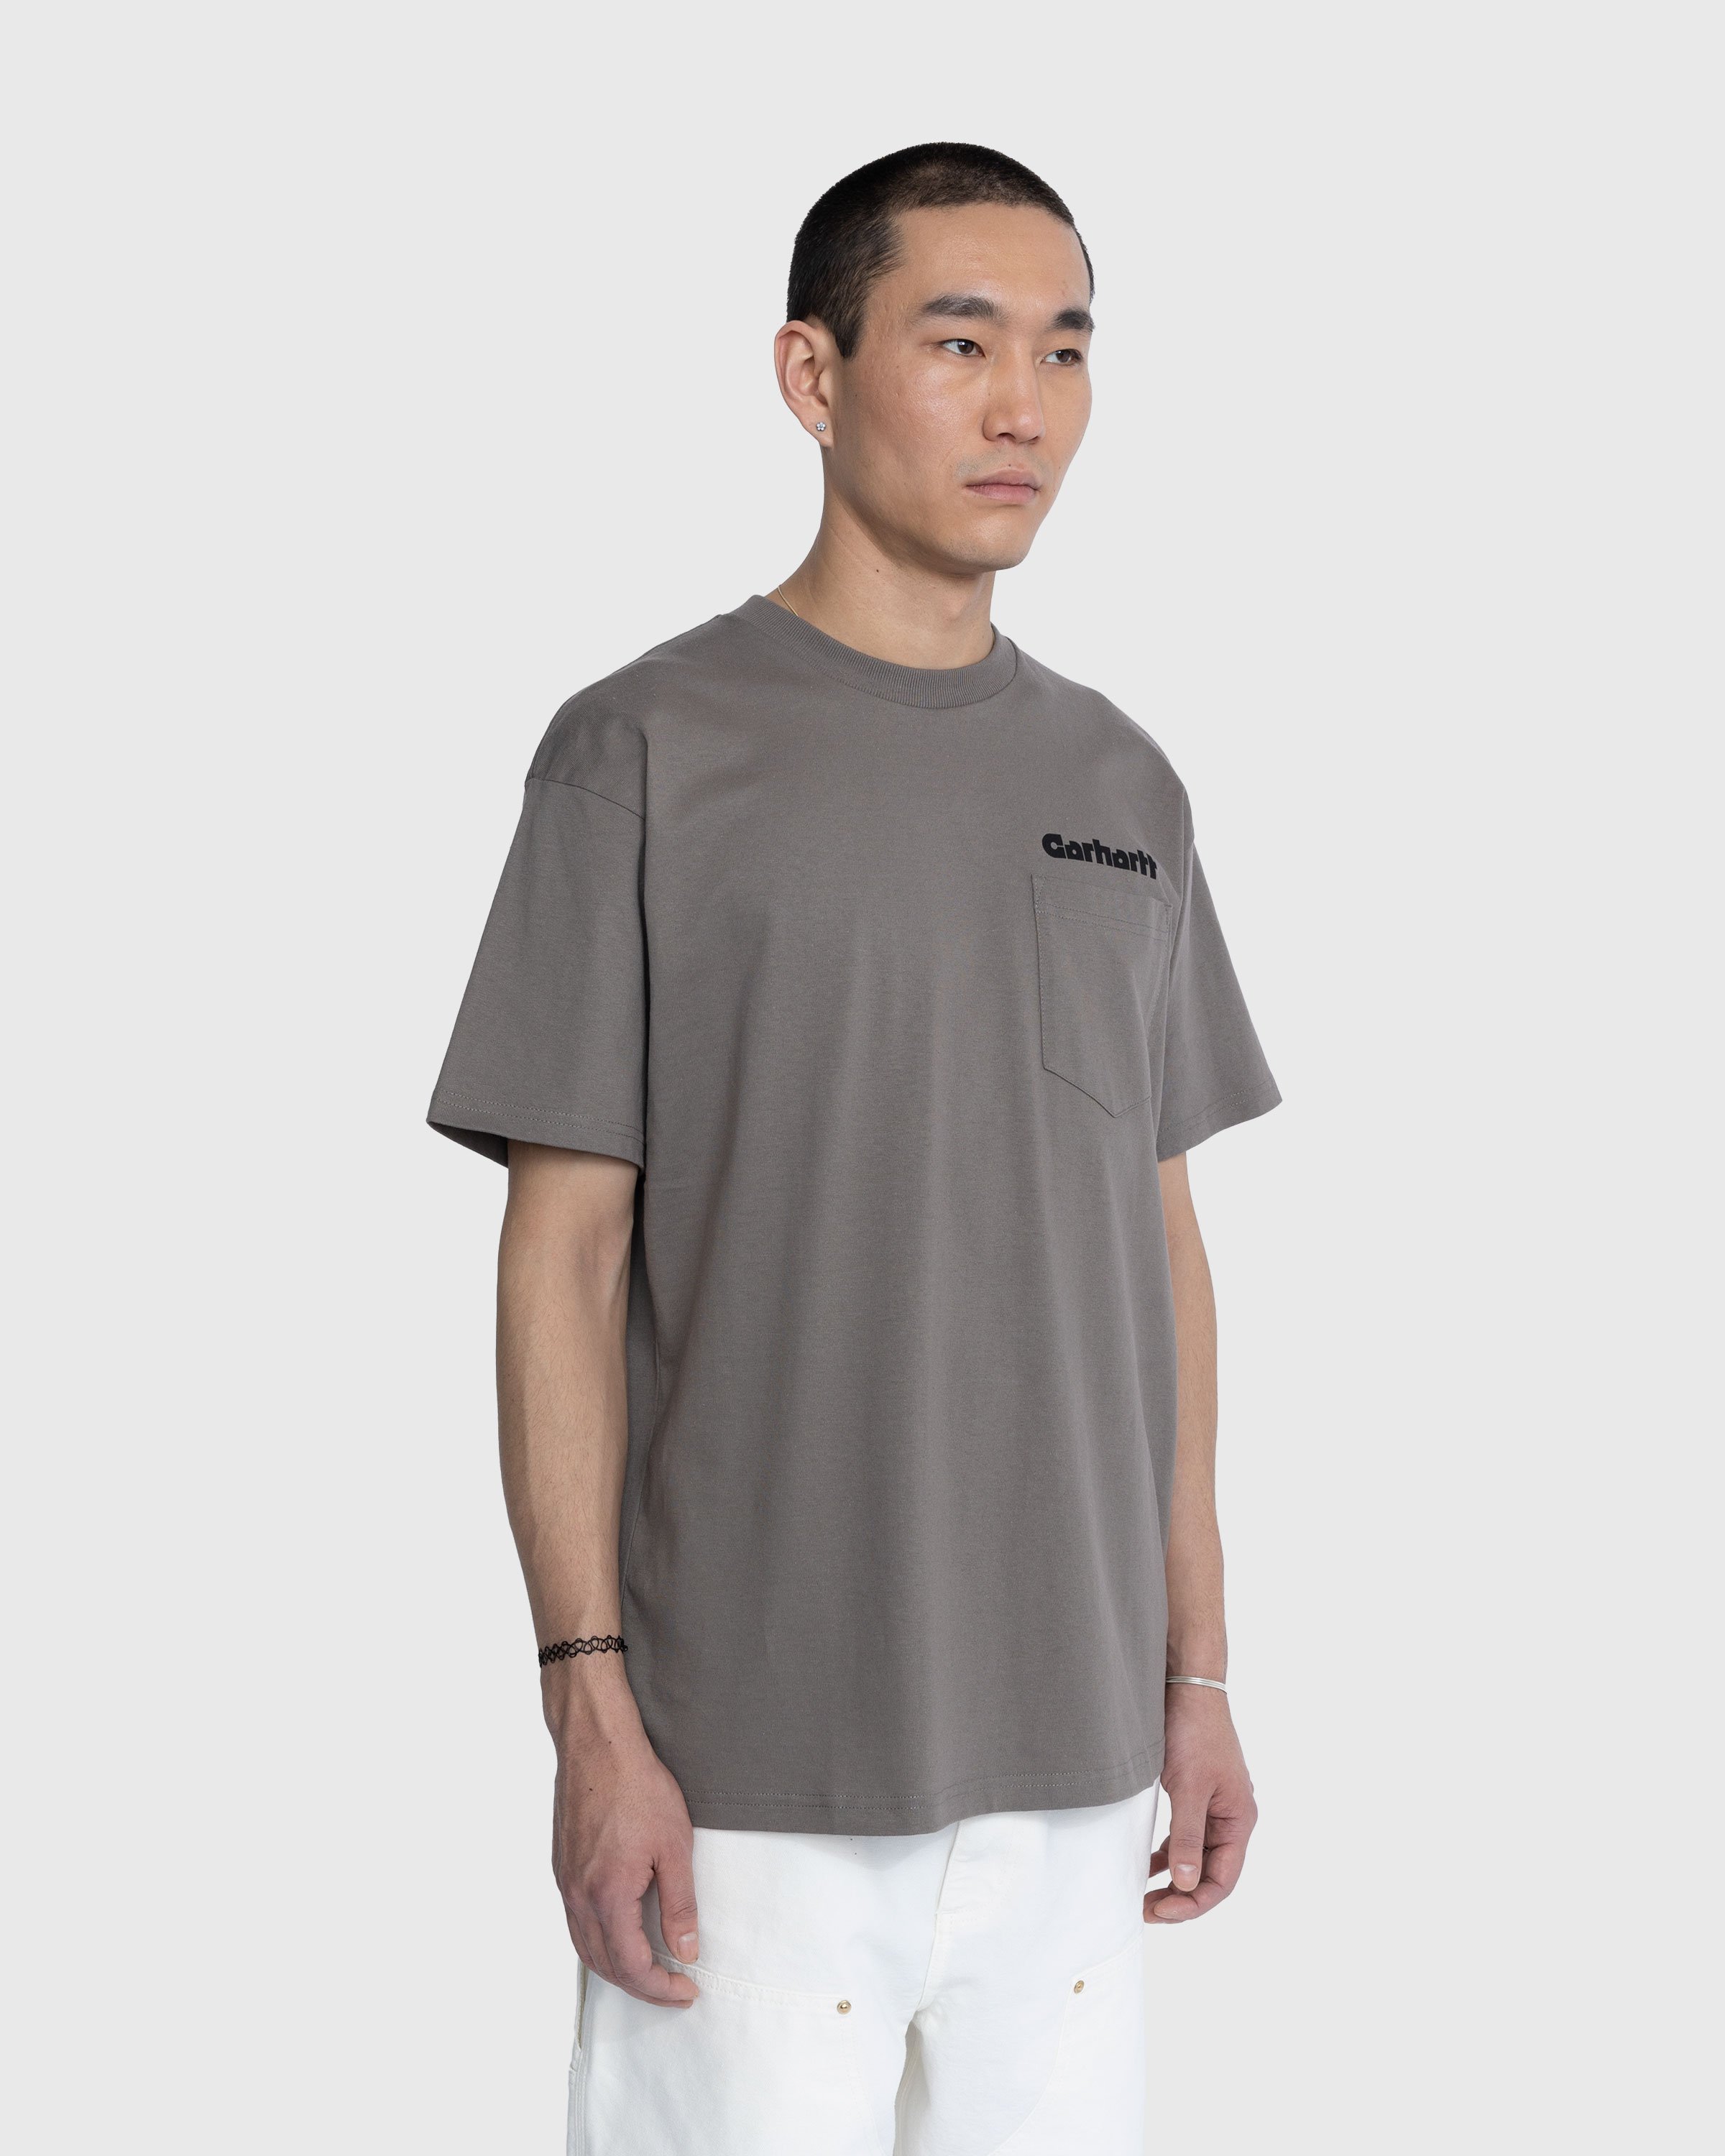 Carhartt WIP - Innovation Pocket T-Shirt Teide - Clothing - Green - Image 5